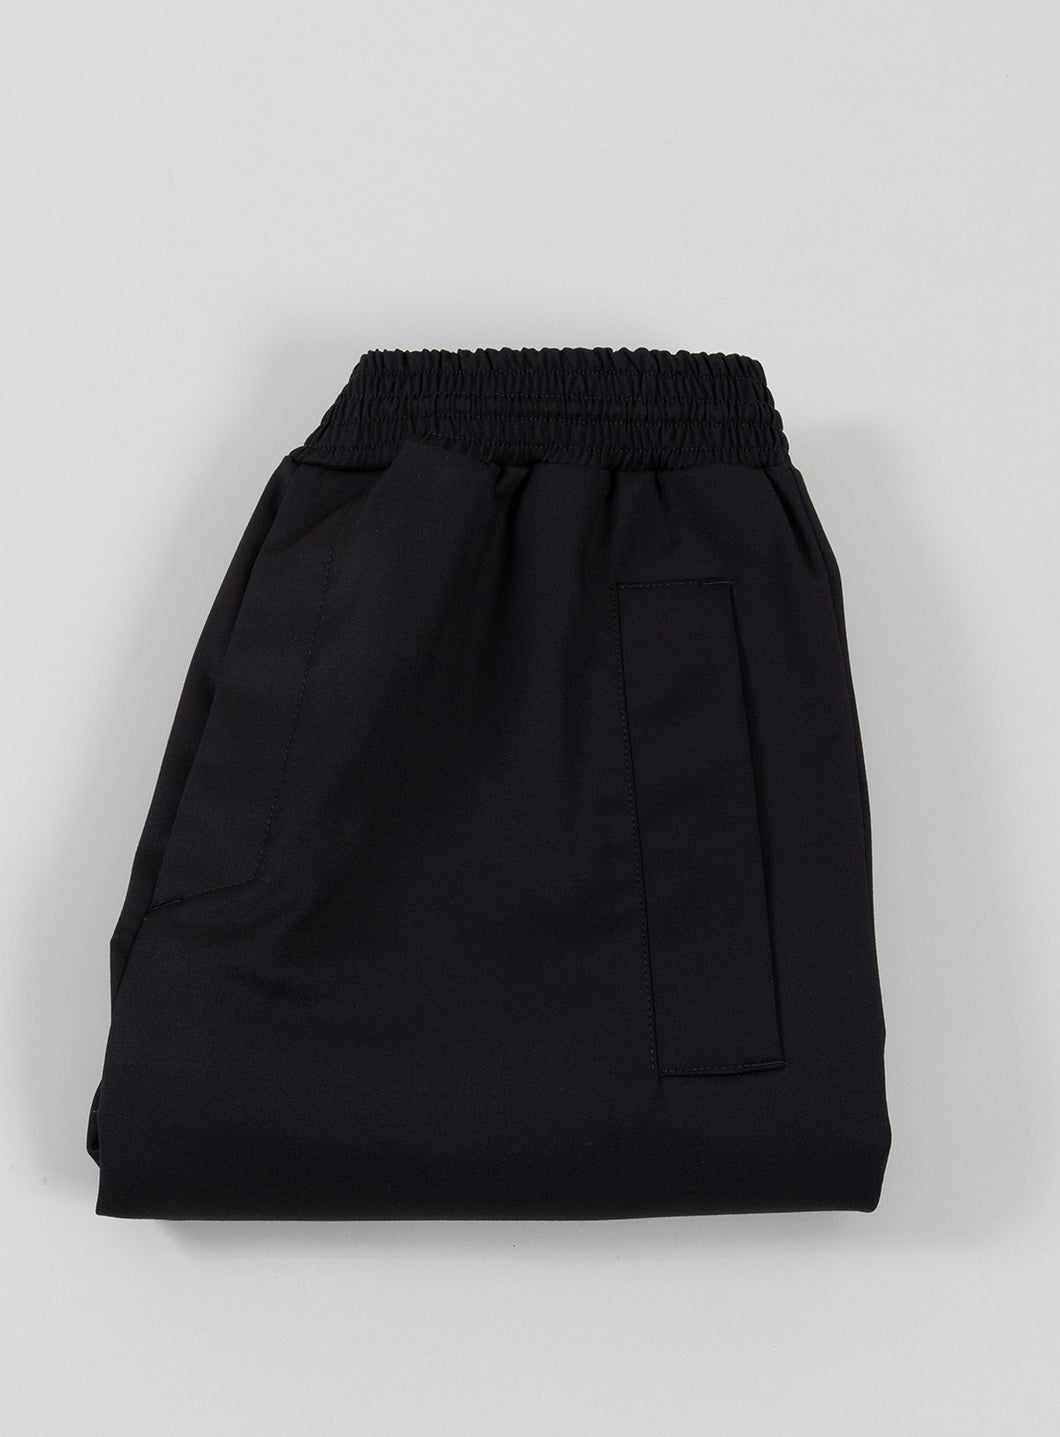 Baggy Pants in Black Serge Fabric